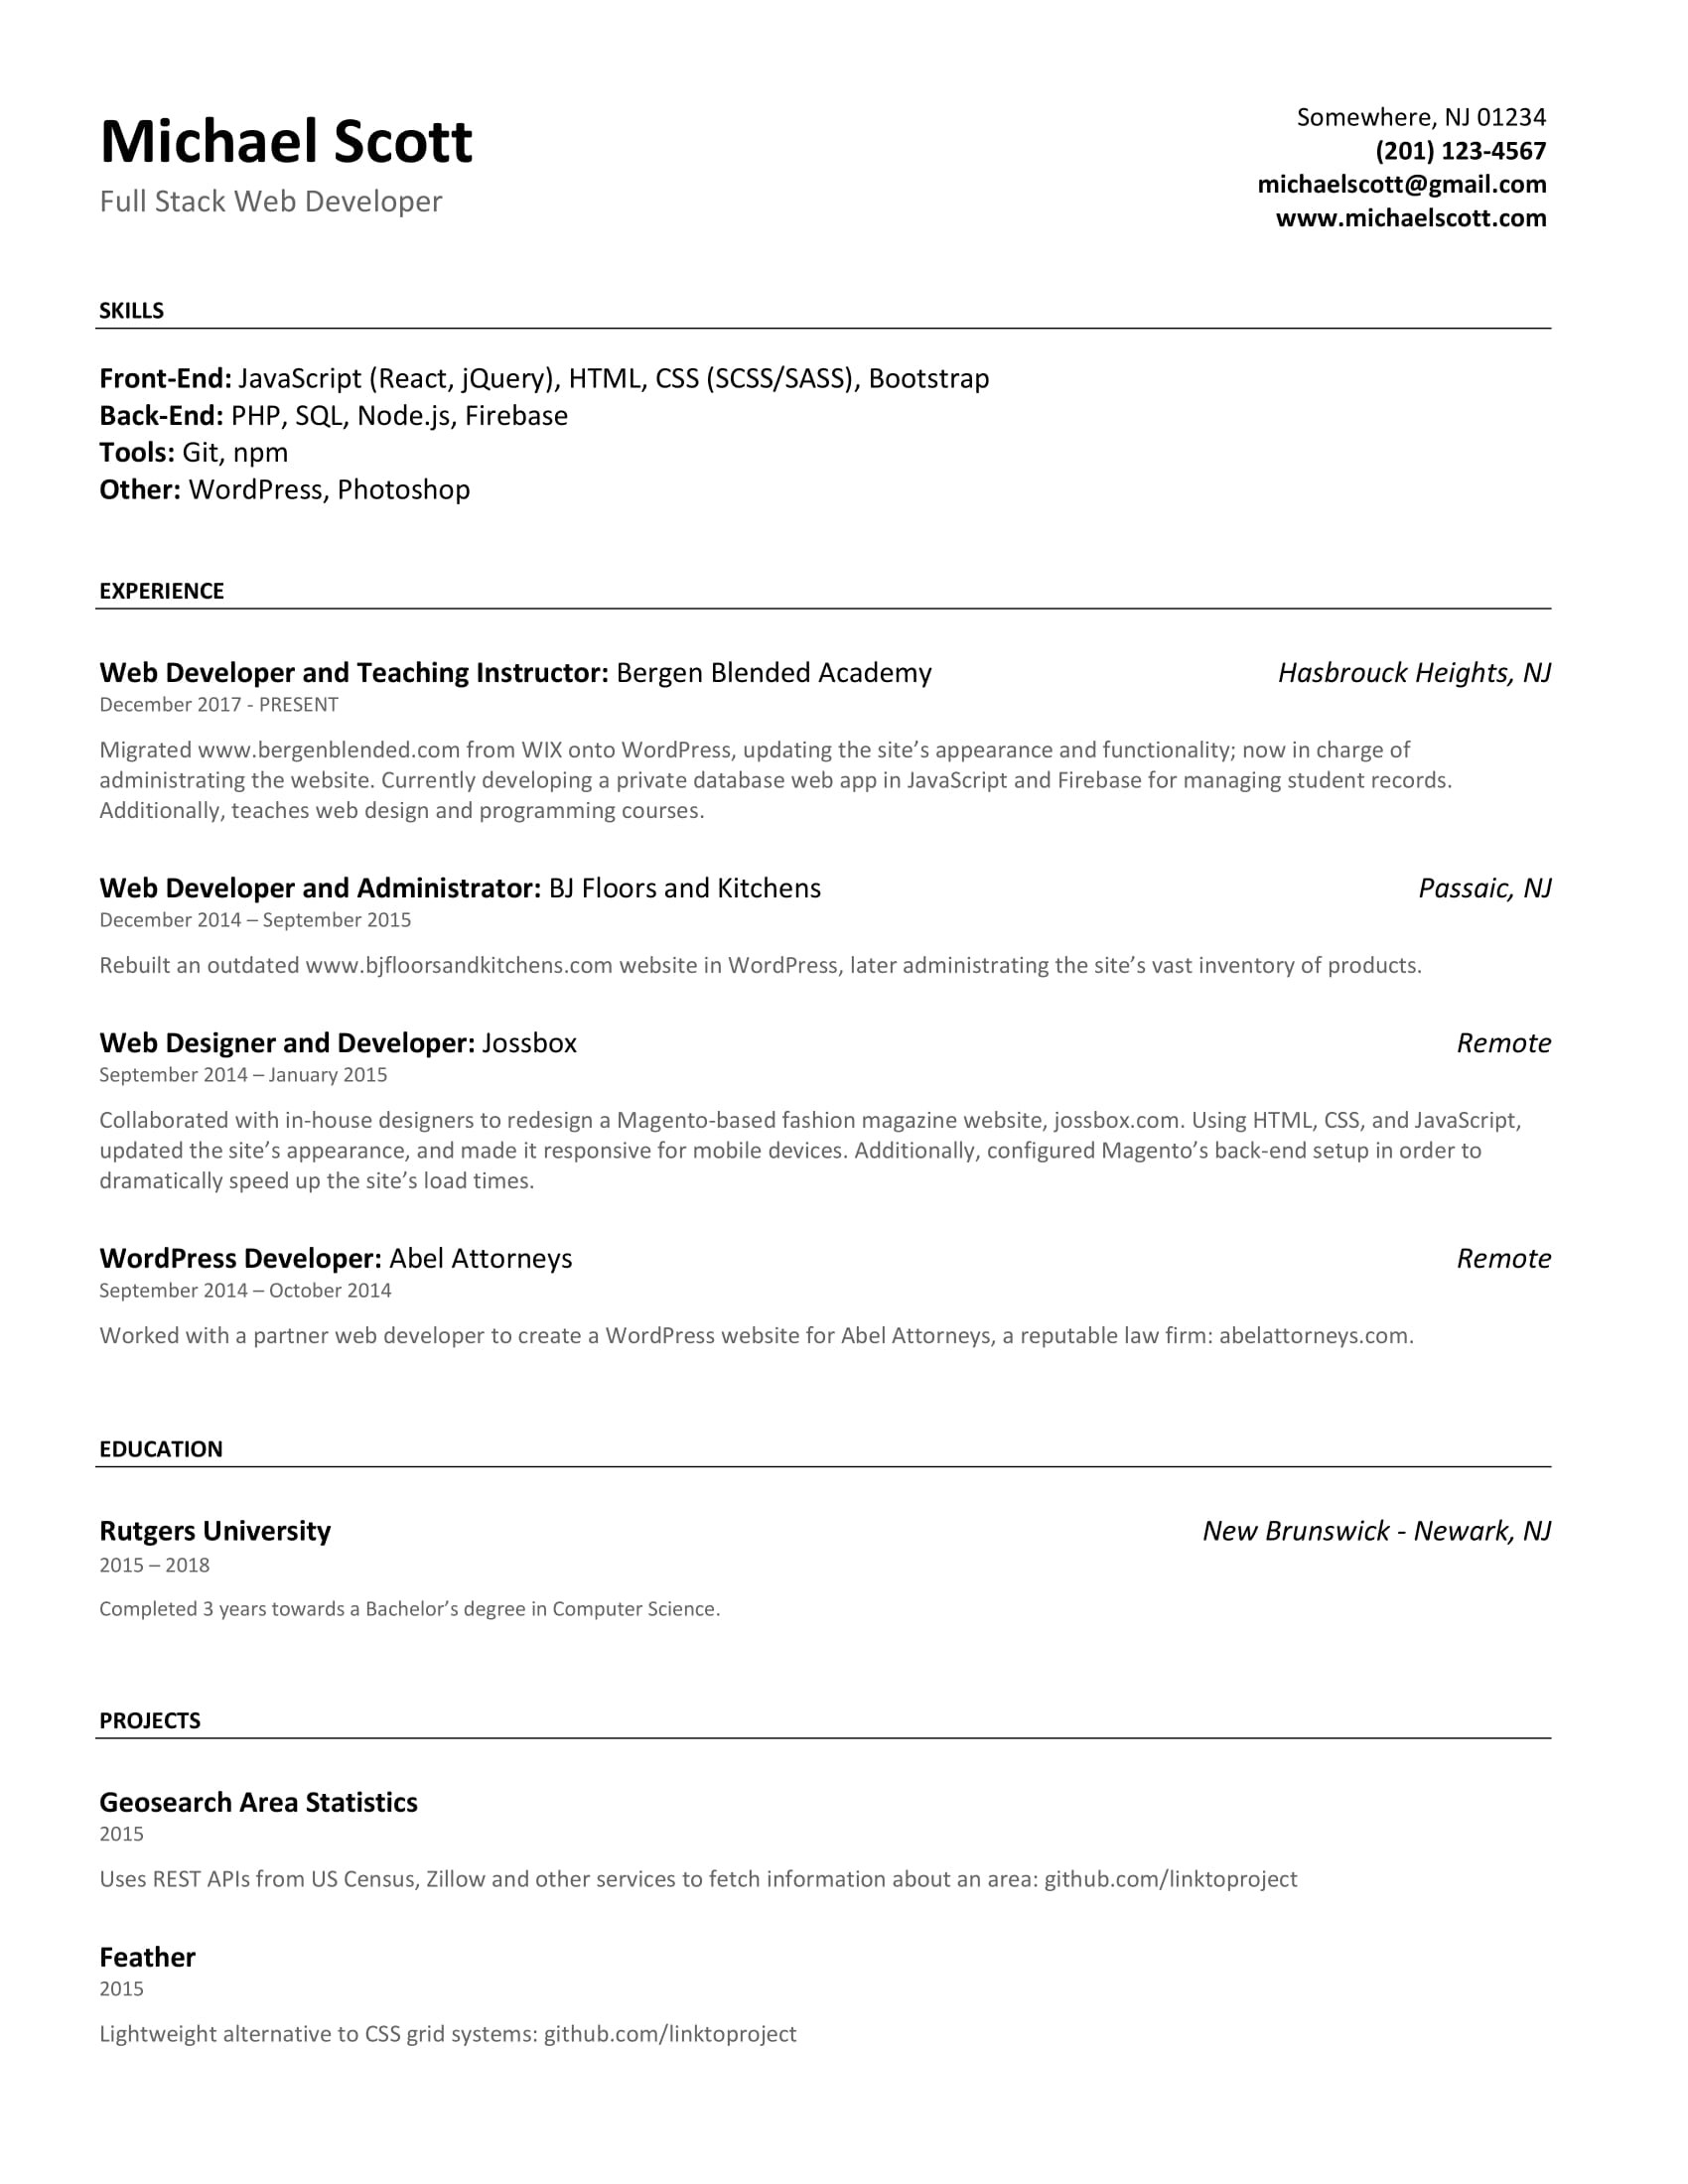 entryleveljunior web developer resume receiving